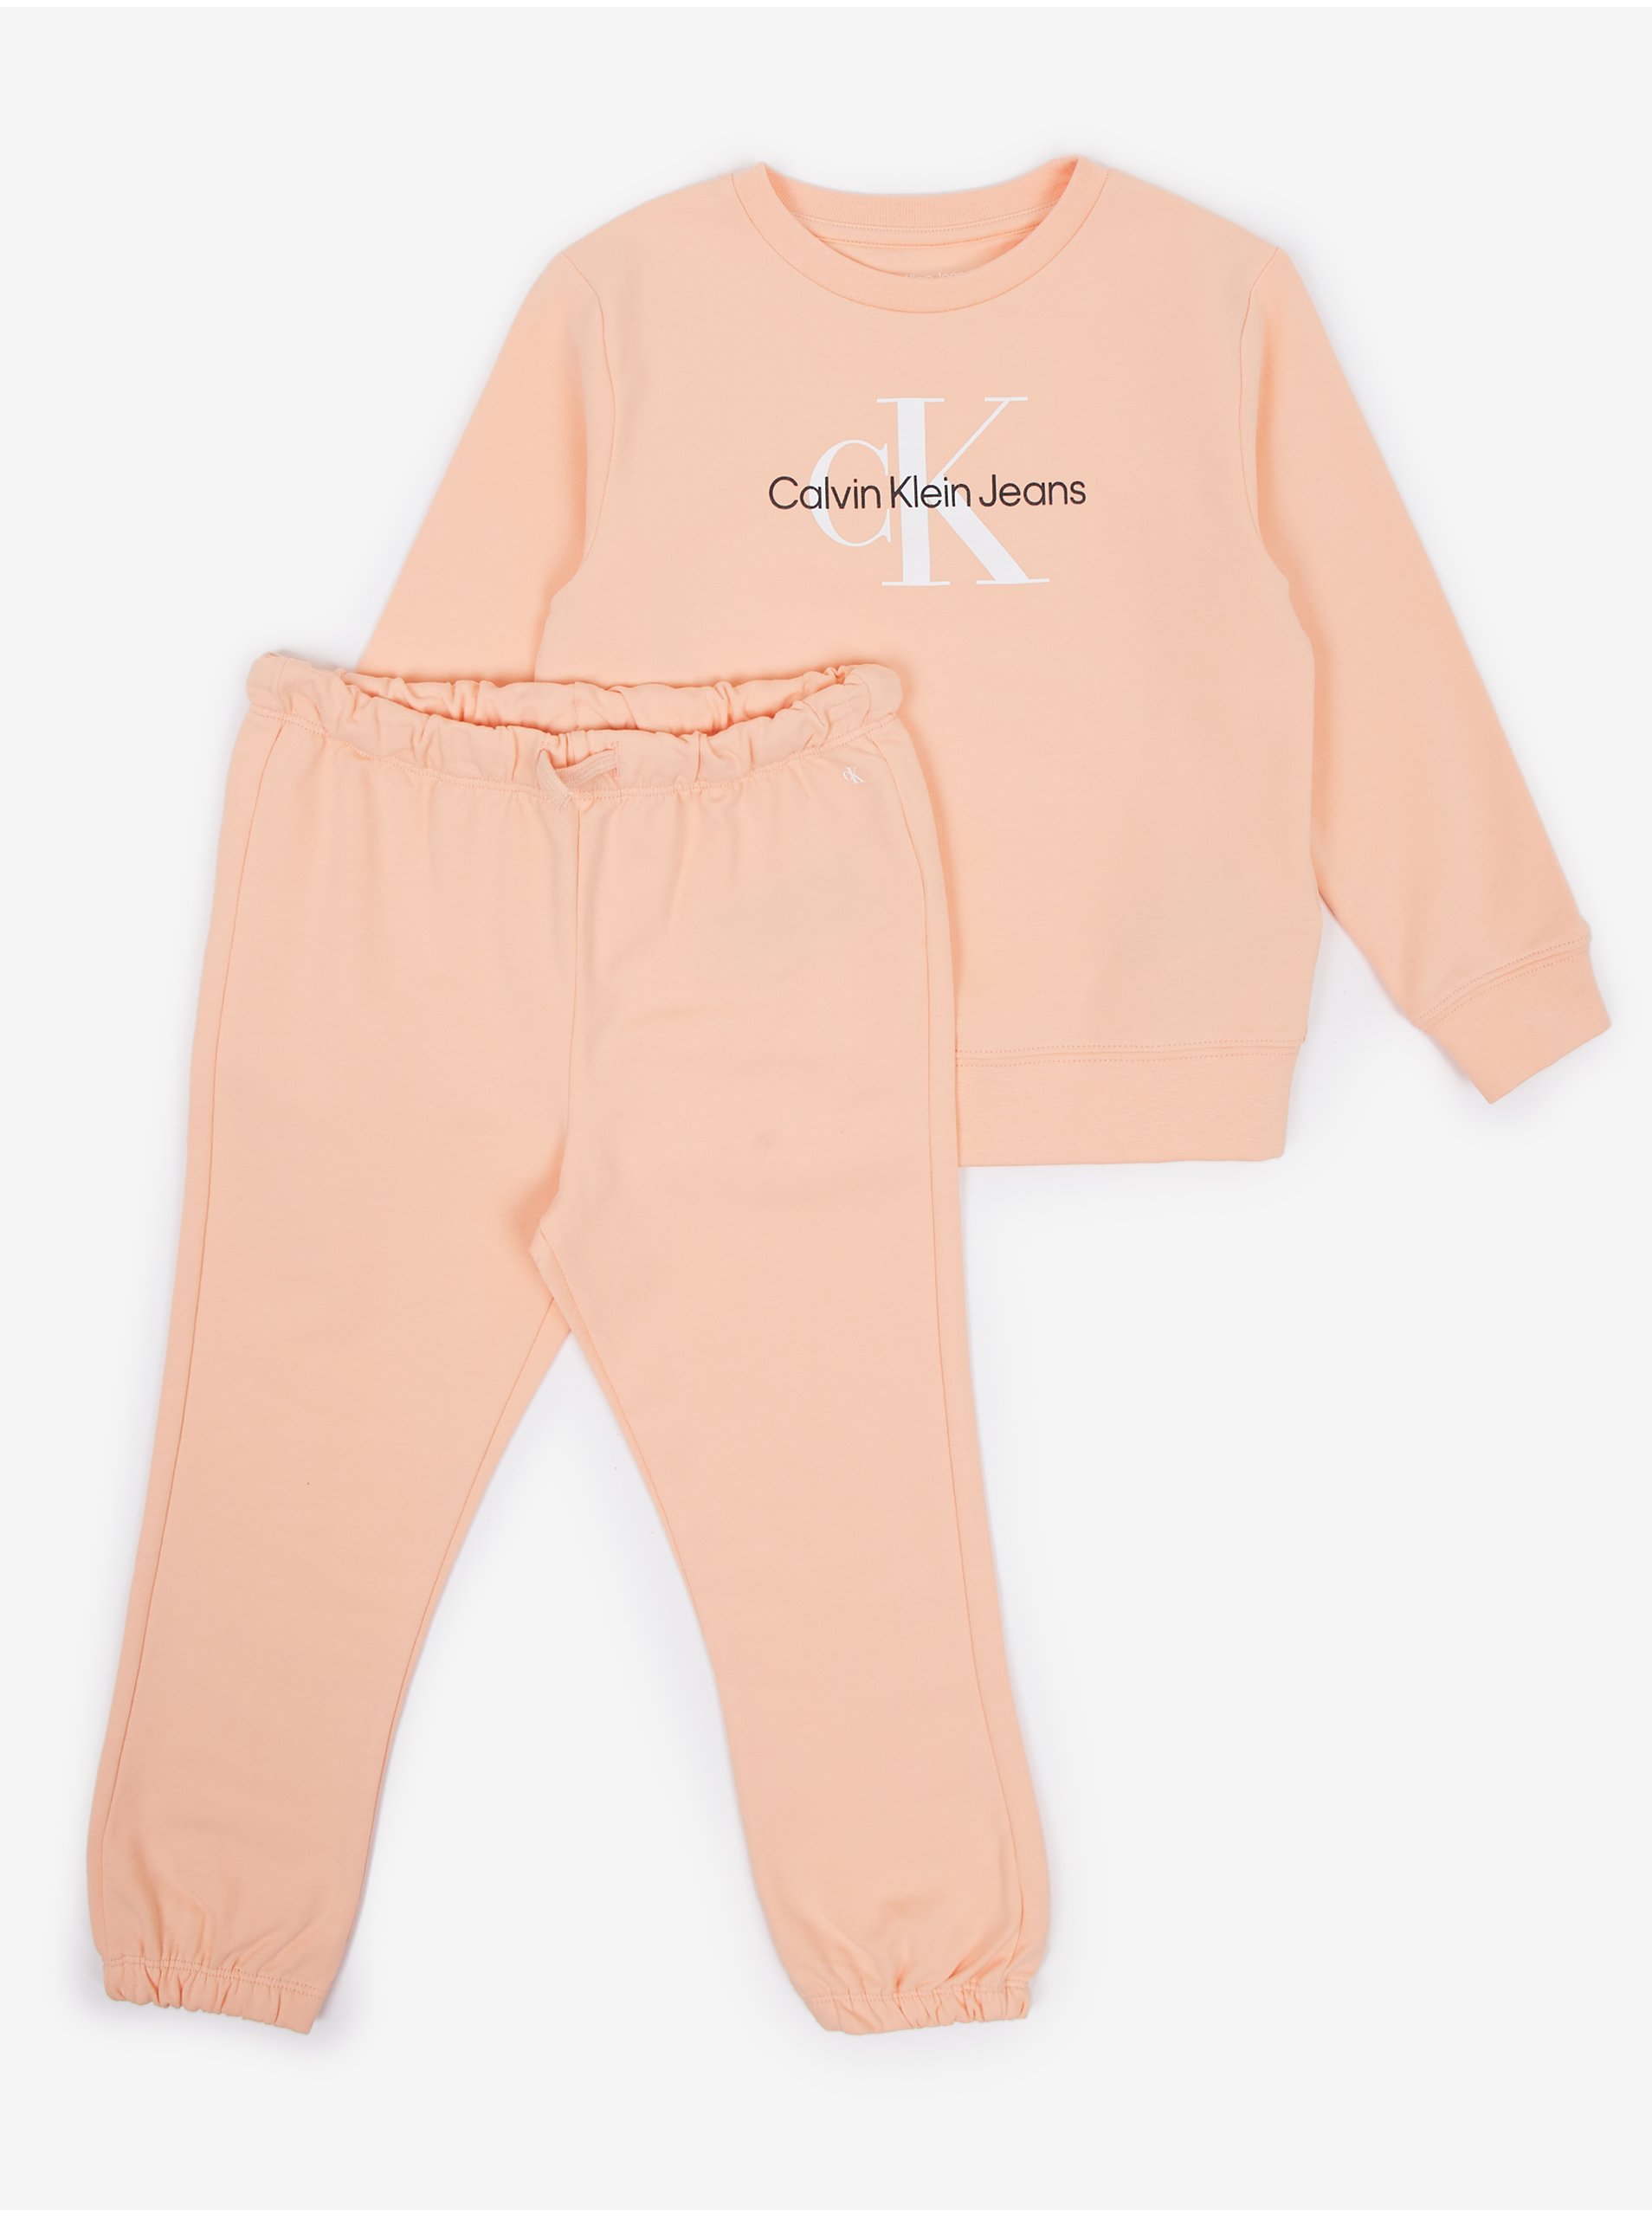 Lacno Marhuľová detská tepláková súprava Calvin Klein Jeans